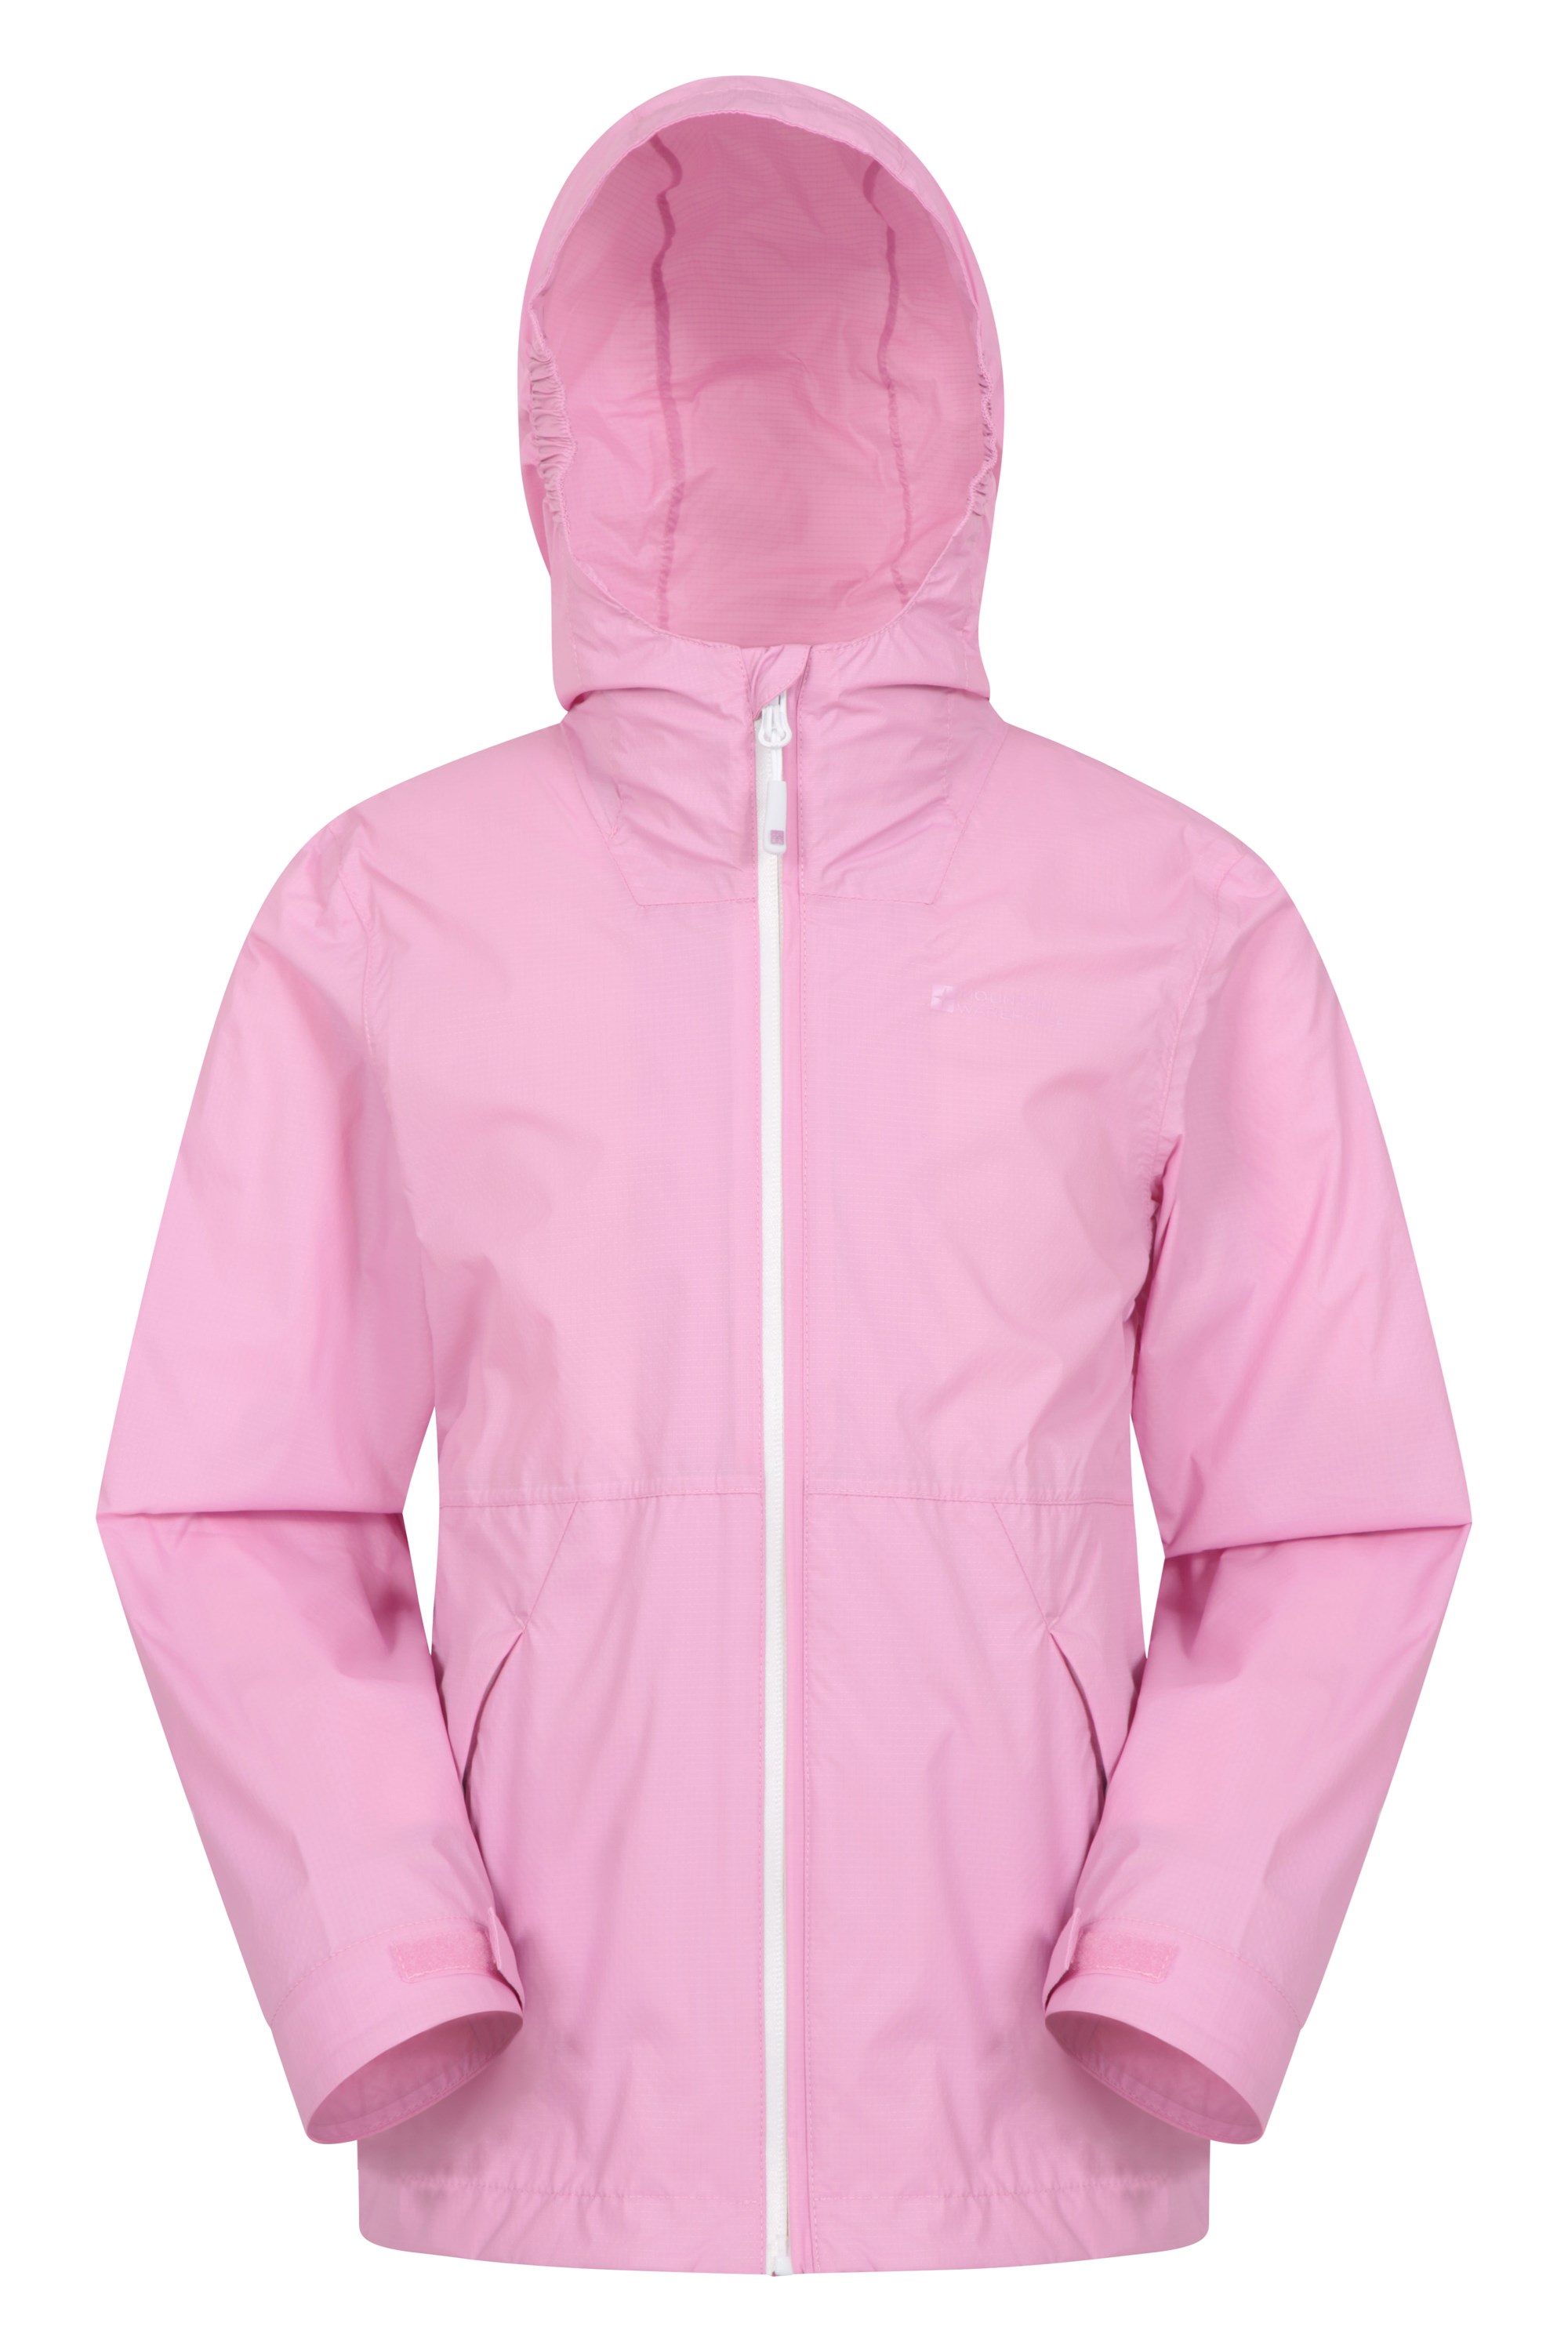 Swerve Kids Waterproof Jacket - Pink